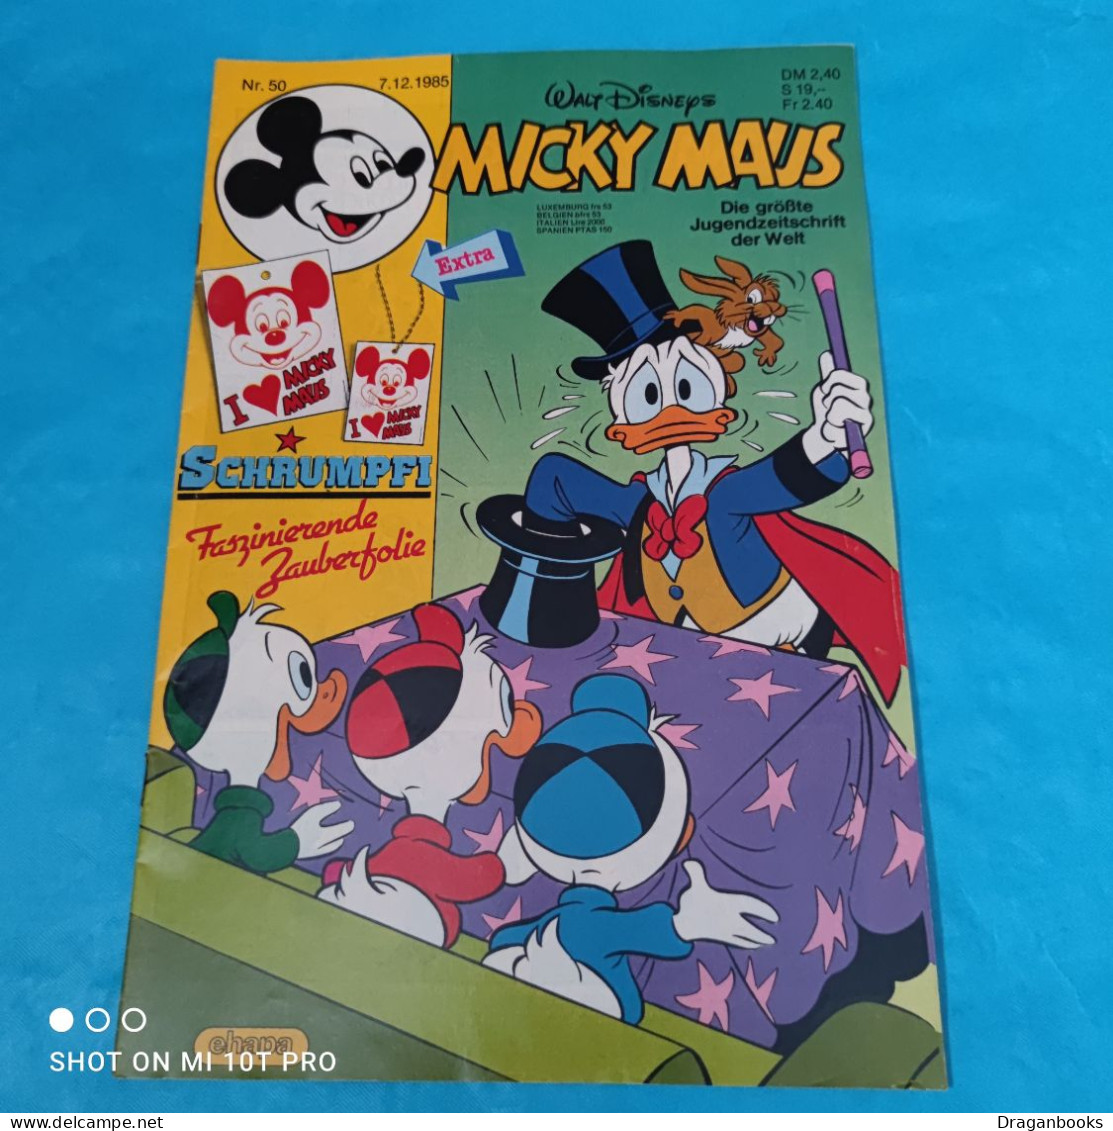 Micky Maus Nr. 50 - 7.12.1985 - Walt Disney